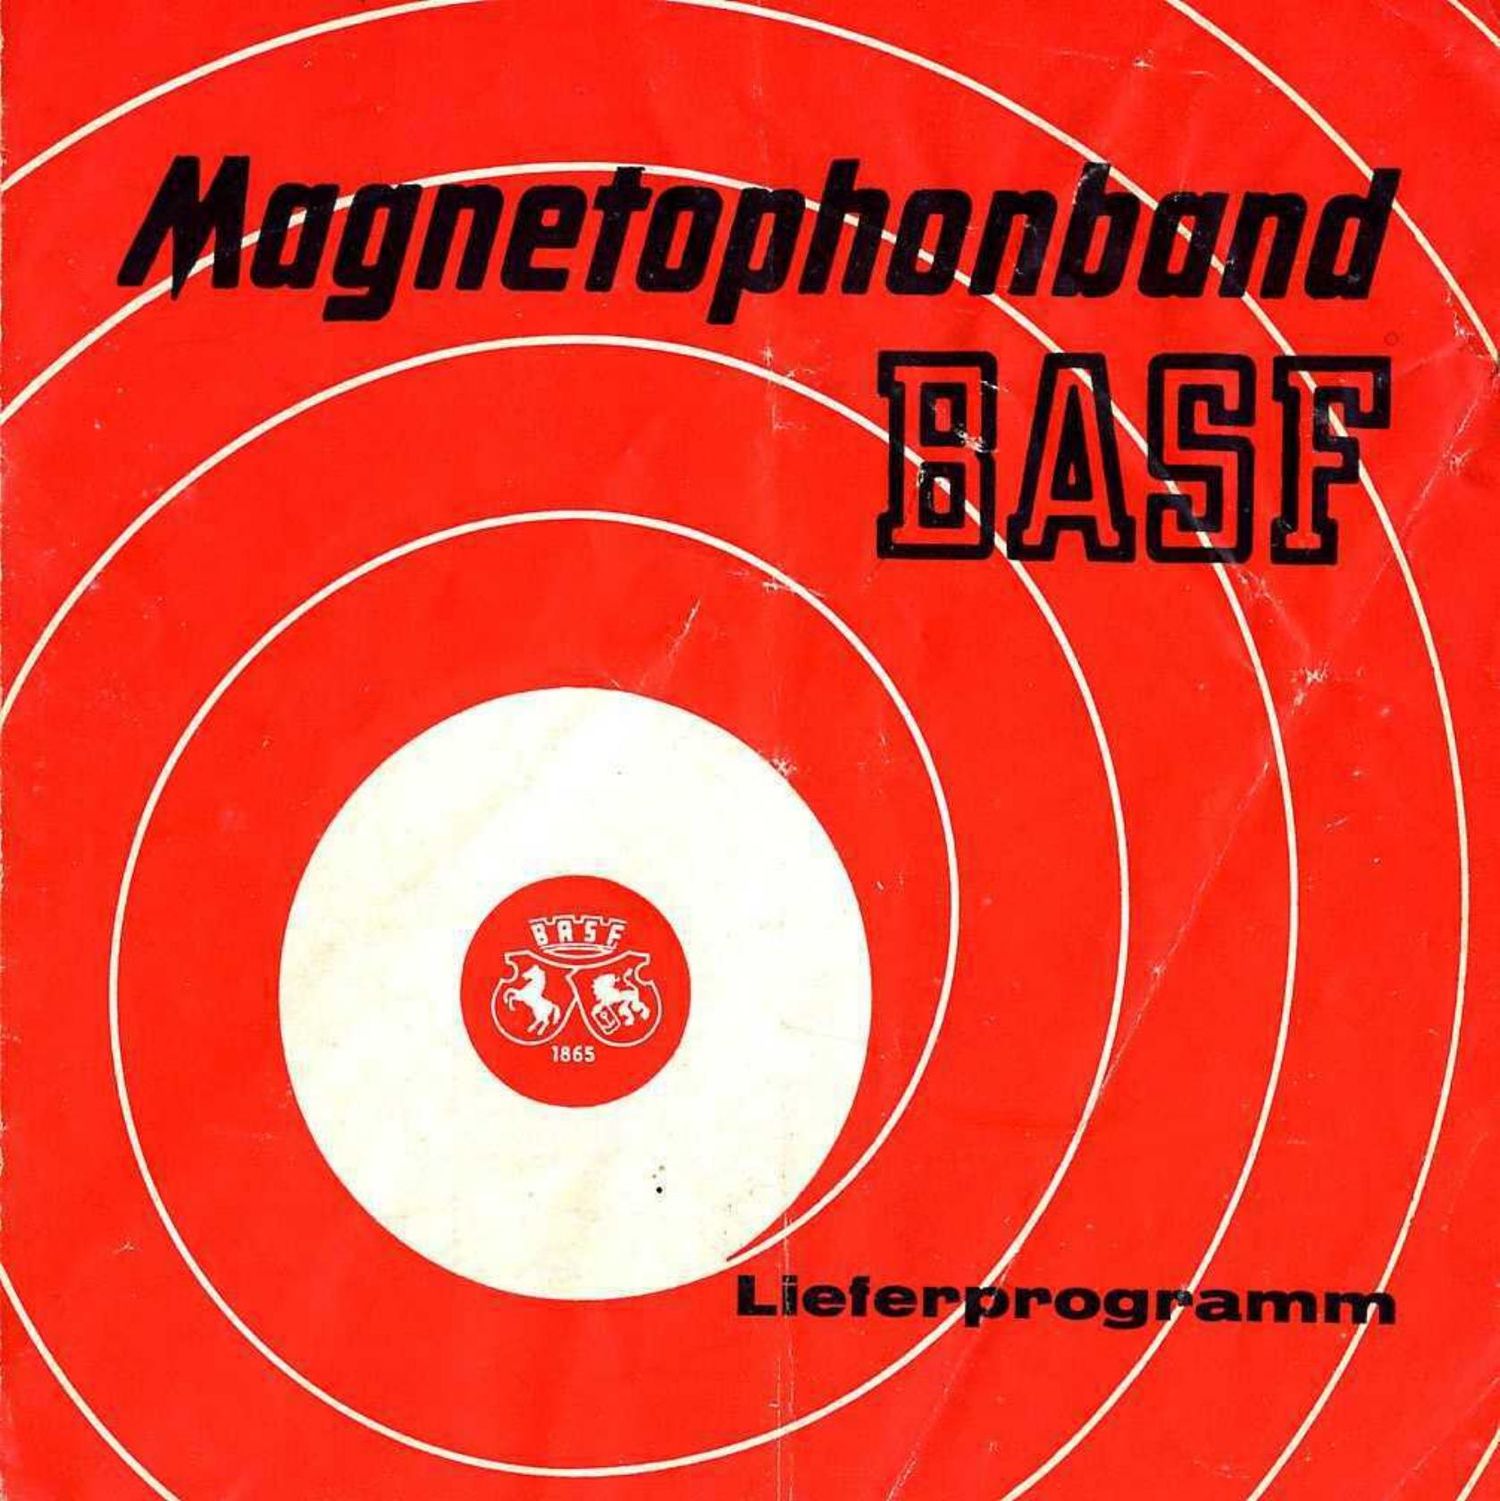 BASF Magnetophonband